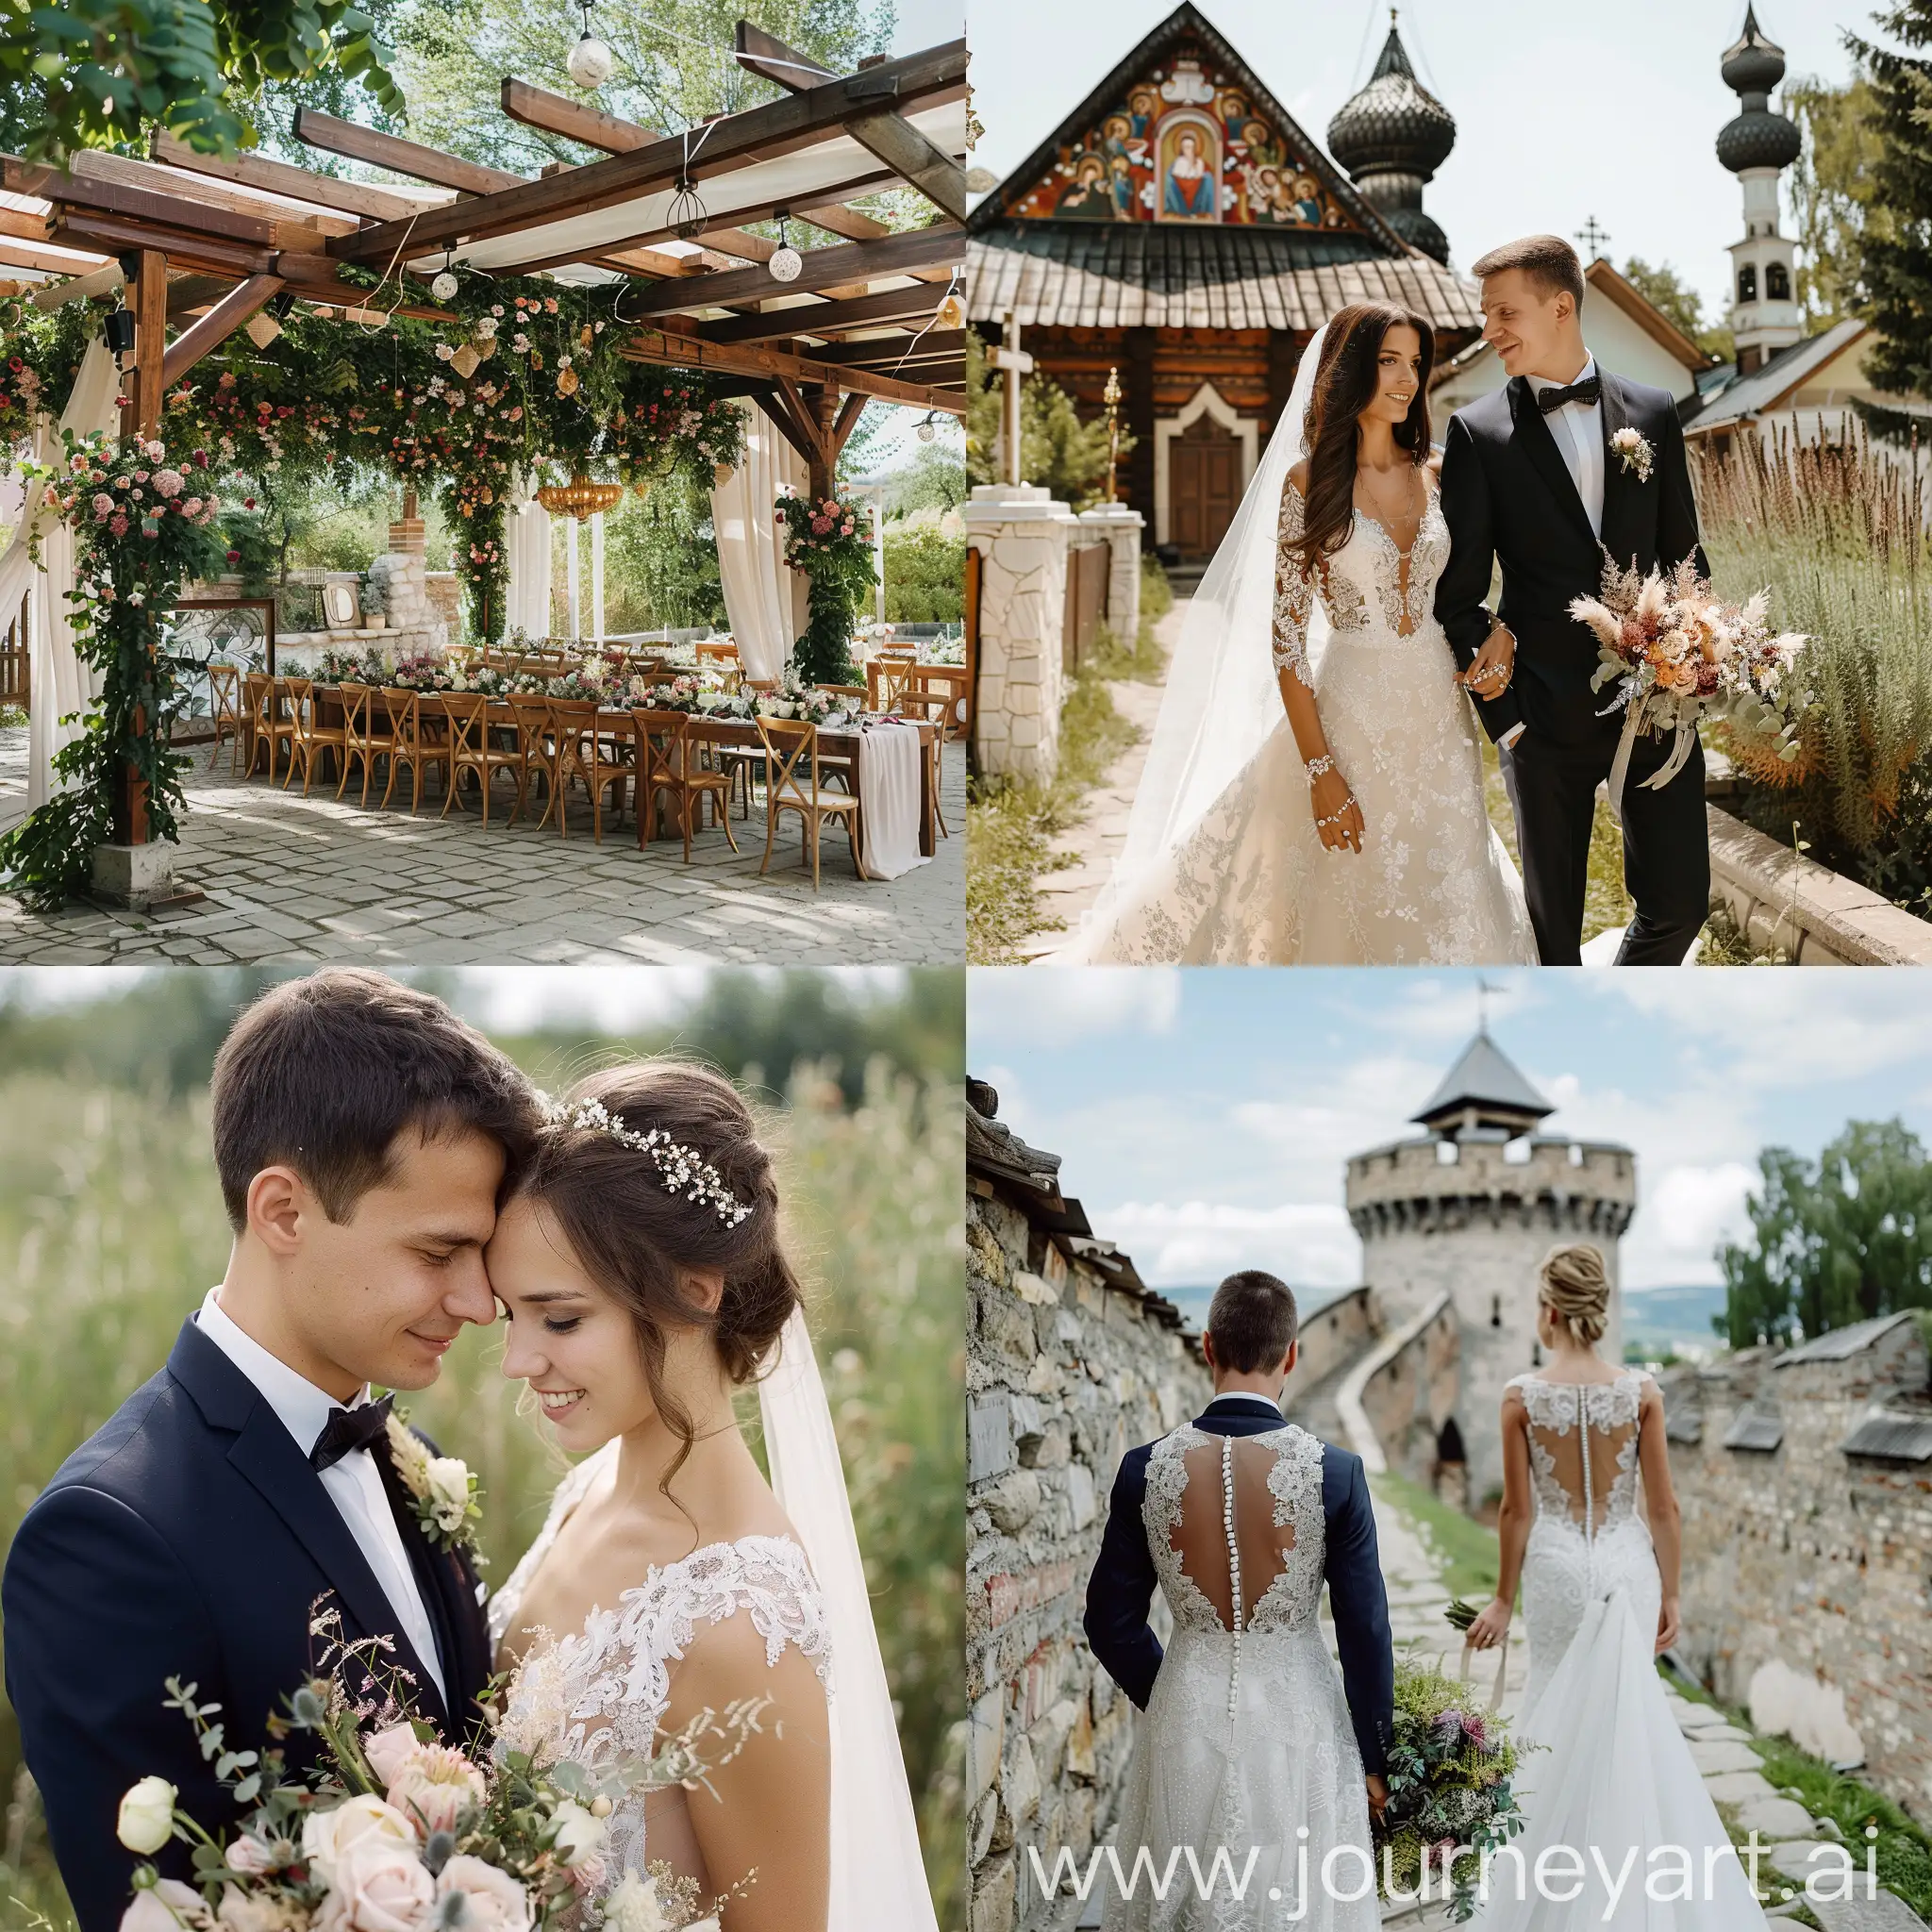 Traditional-Moldovan-Wedding-Celebration-with-Vibrant-Festivities